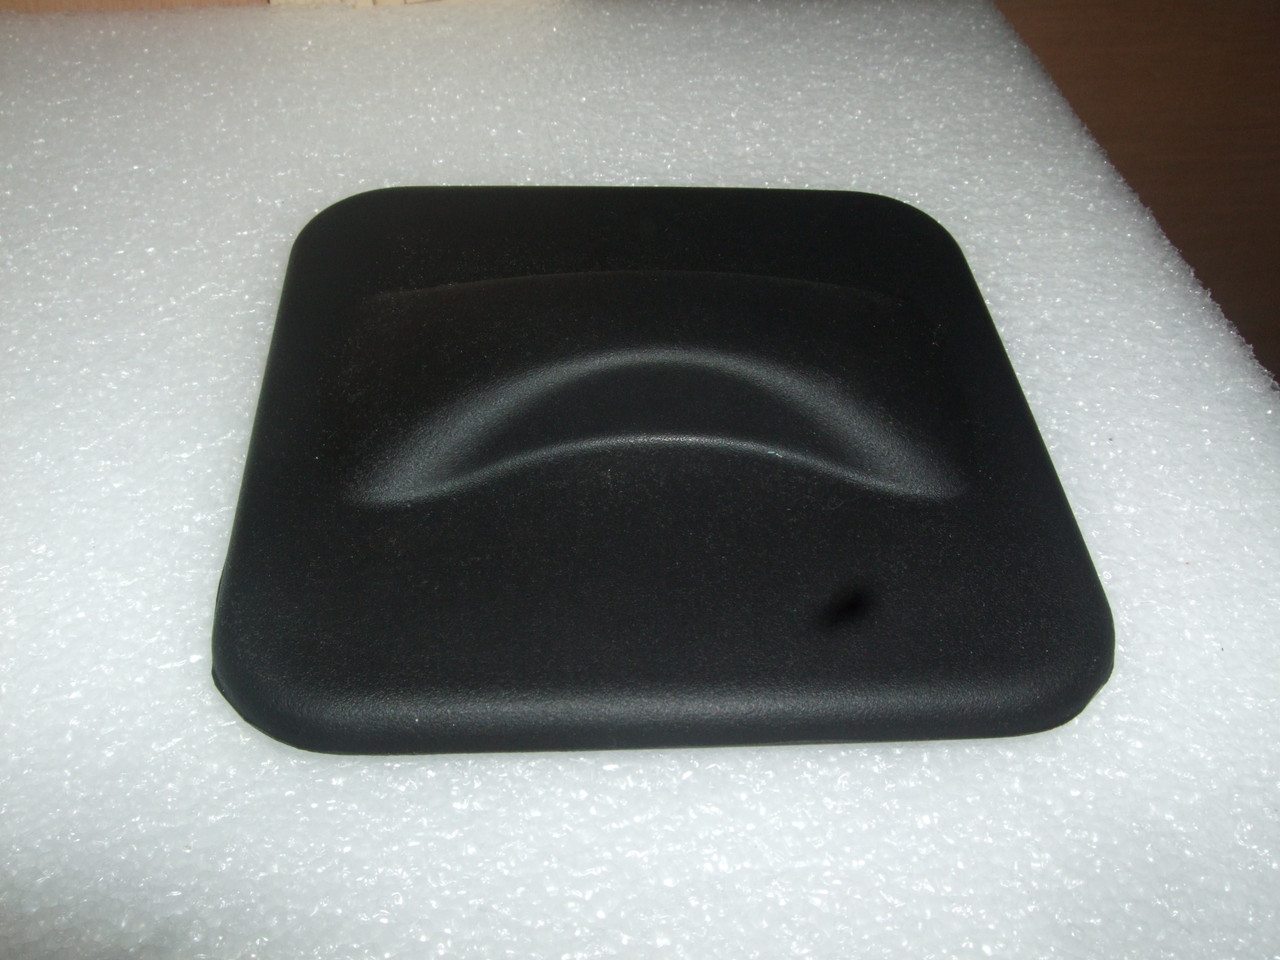 Corp Magic 50-136-7770 Touch 2 Ice Pan, Black, 1 Liter Capacity